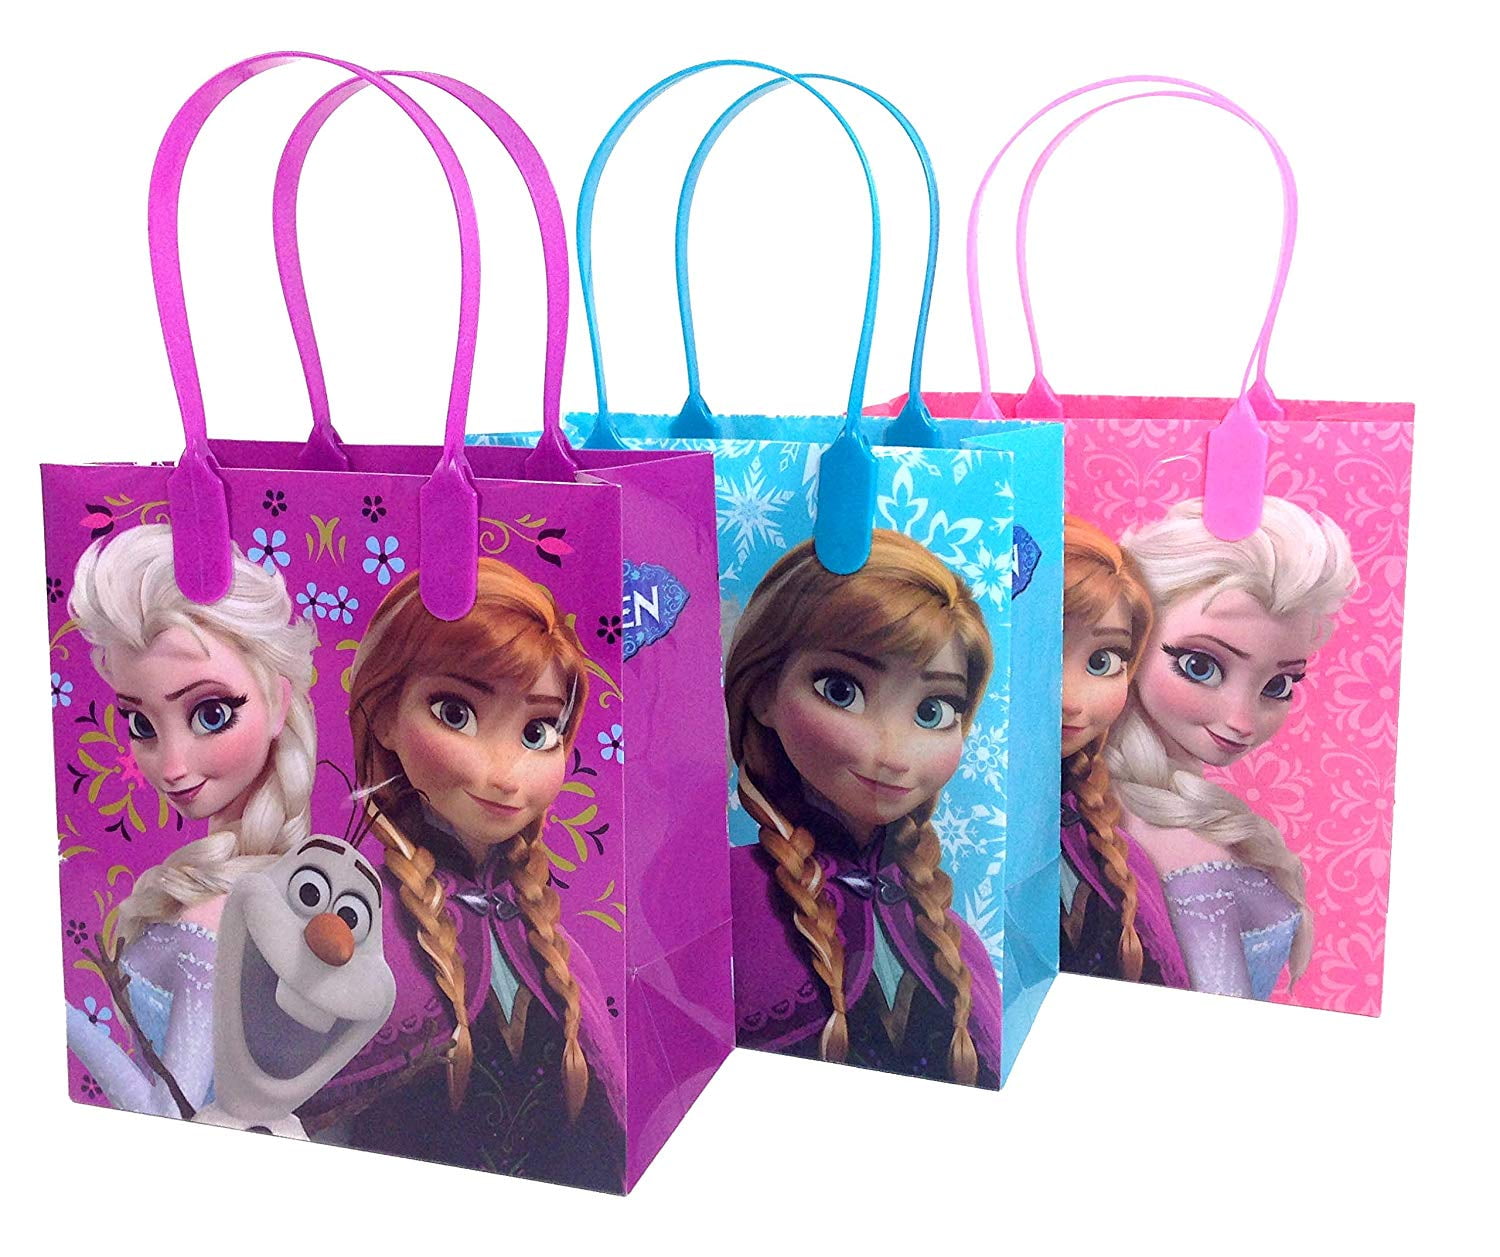 Frozen 2 Believe in The Journey 6ck Reusable 10" Tote Bags Goodie Treat Bags